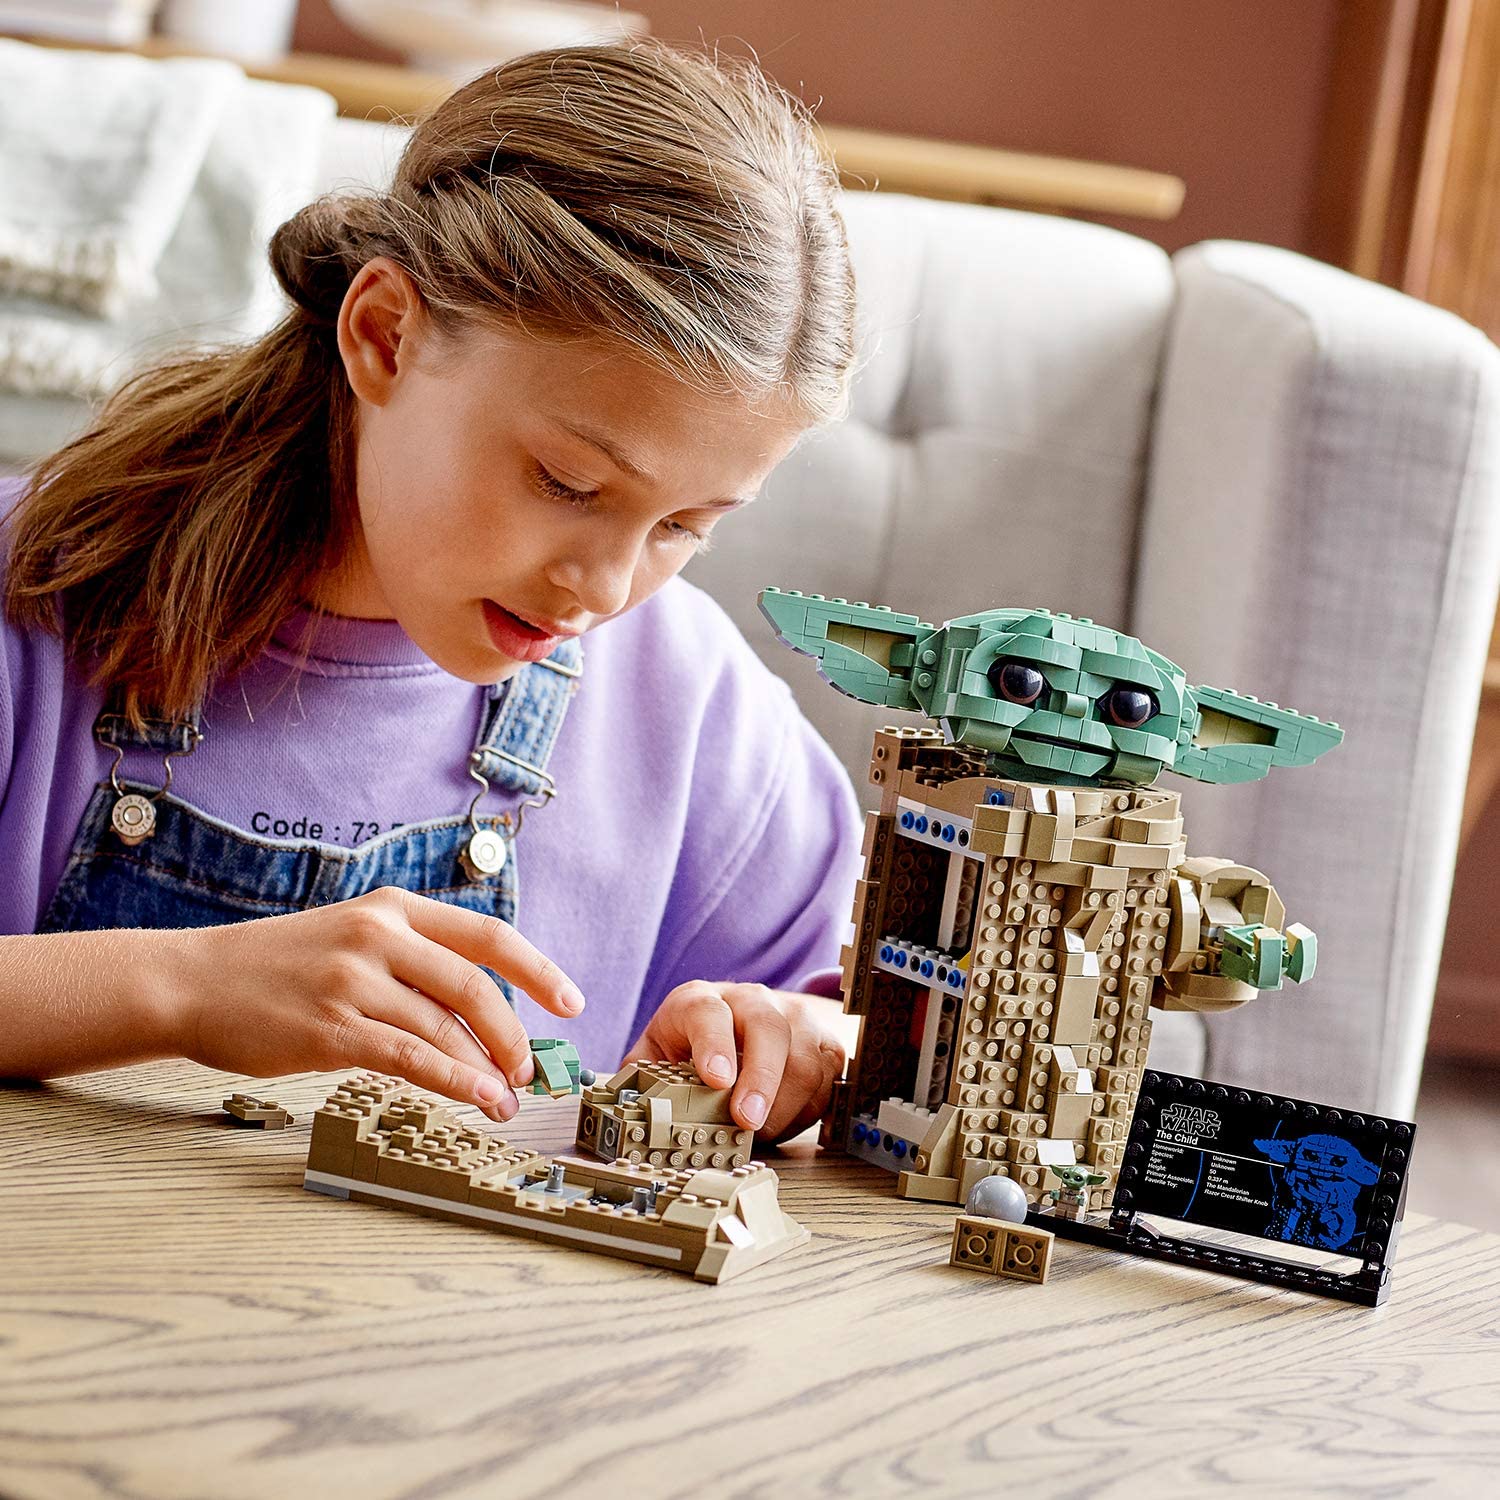 LEGO Star Wars The Mandalorian 75318 The Child 1073 Piece Building Kit